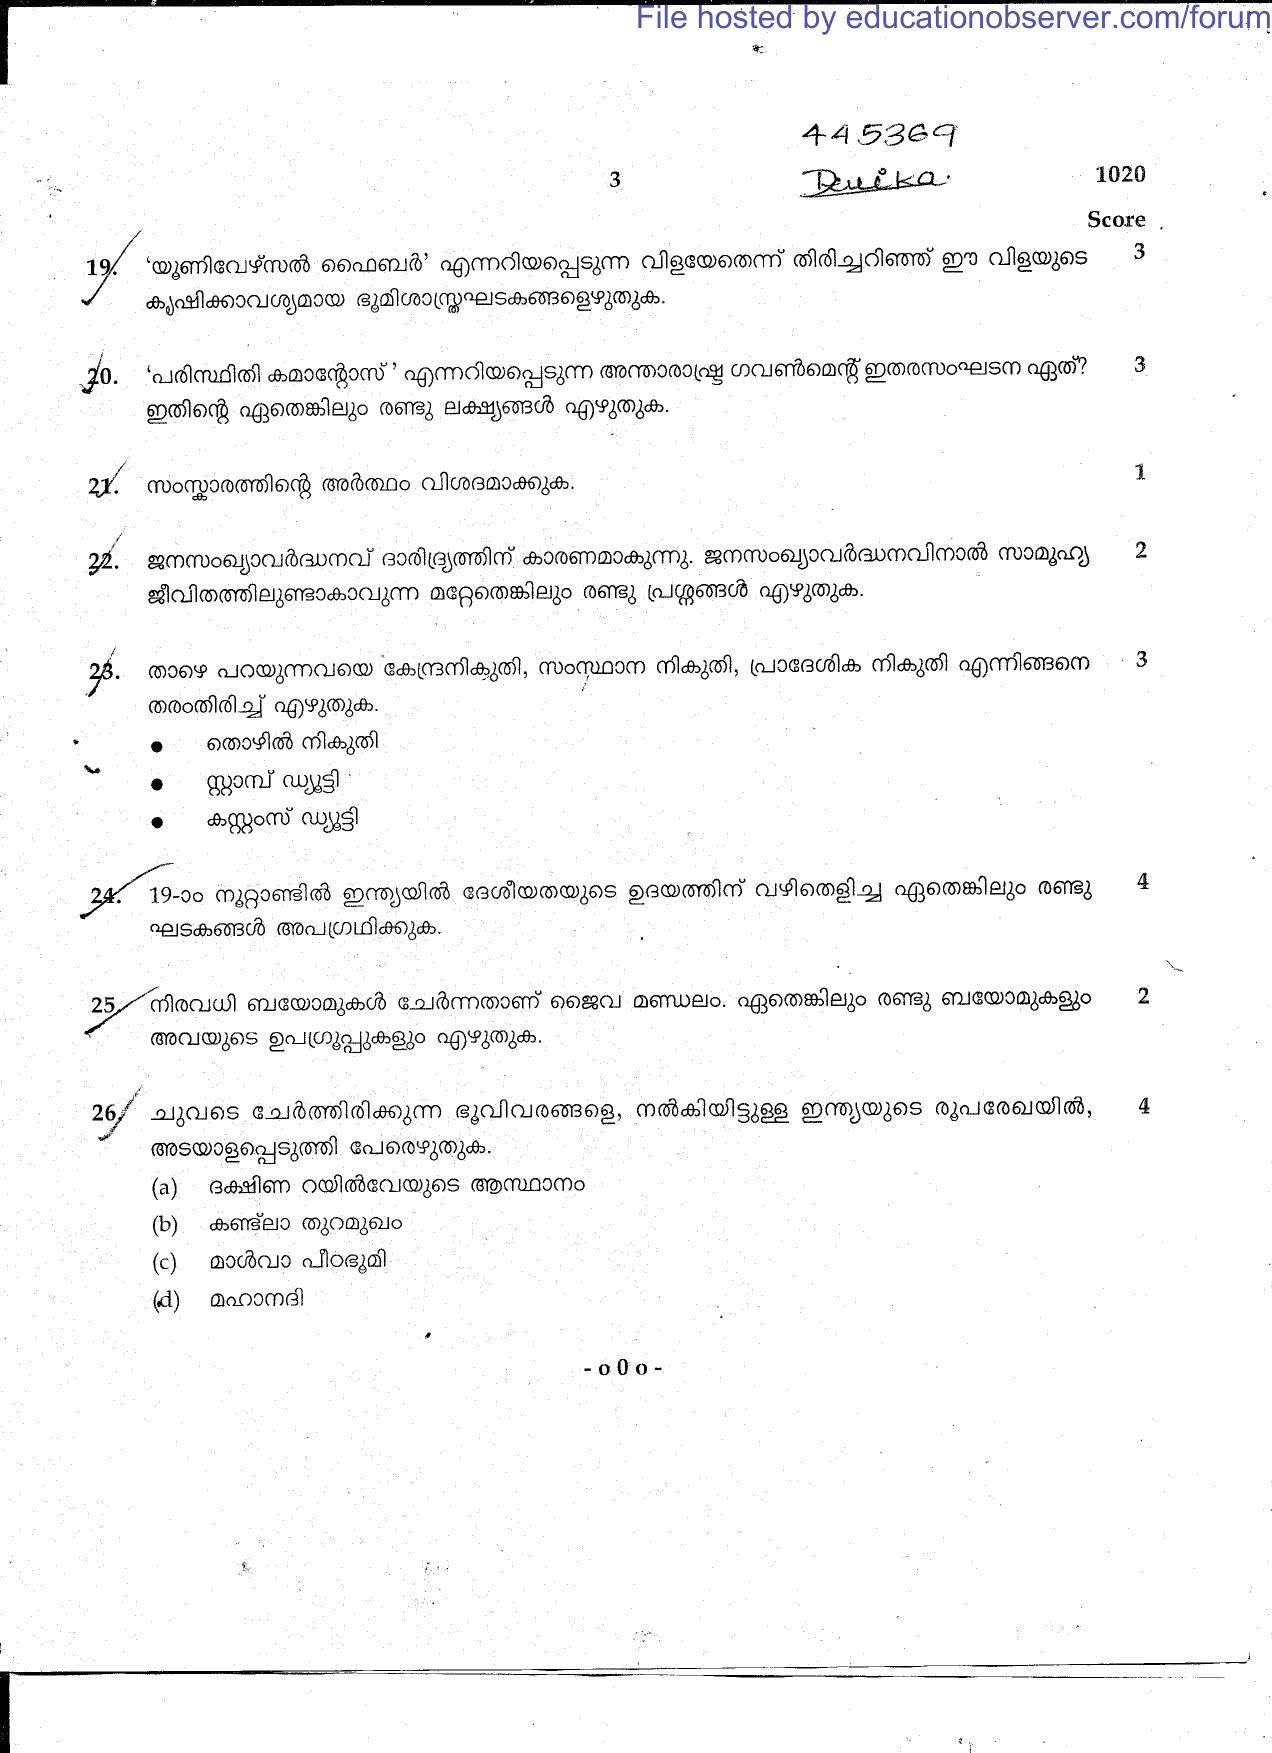 Kerala SSLC 2014 Social Science (MM) Question Paper - Page 3